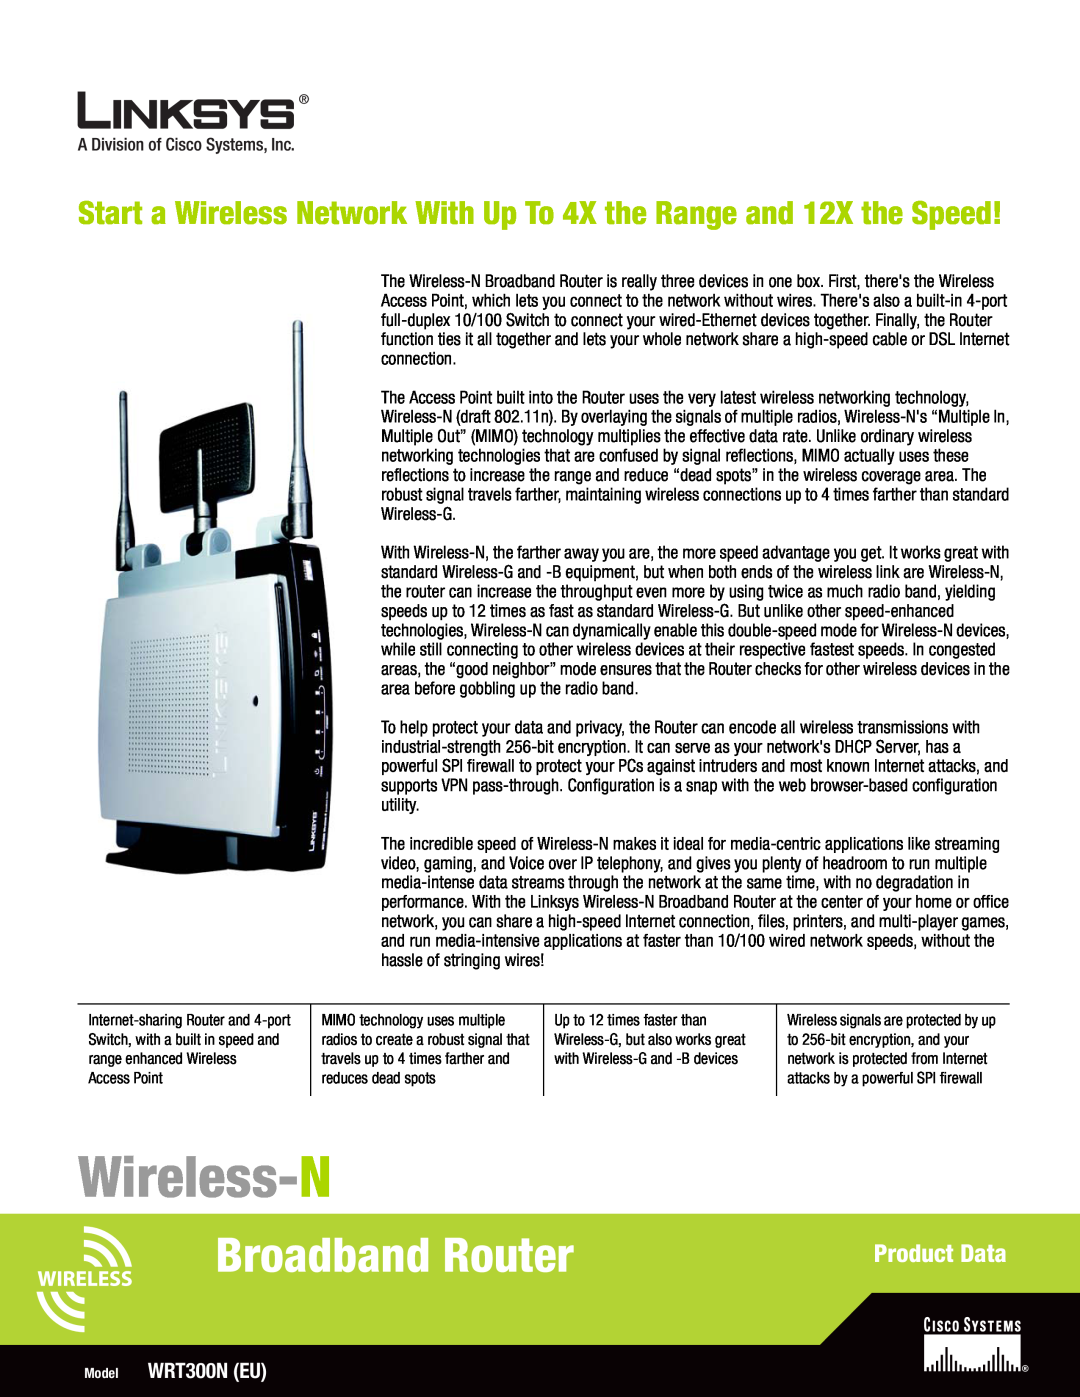 Linksys manual Wireless-N, Model WRT300N EU, Broadband Router, Product Data 